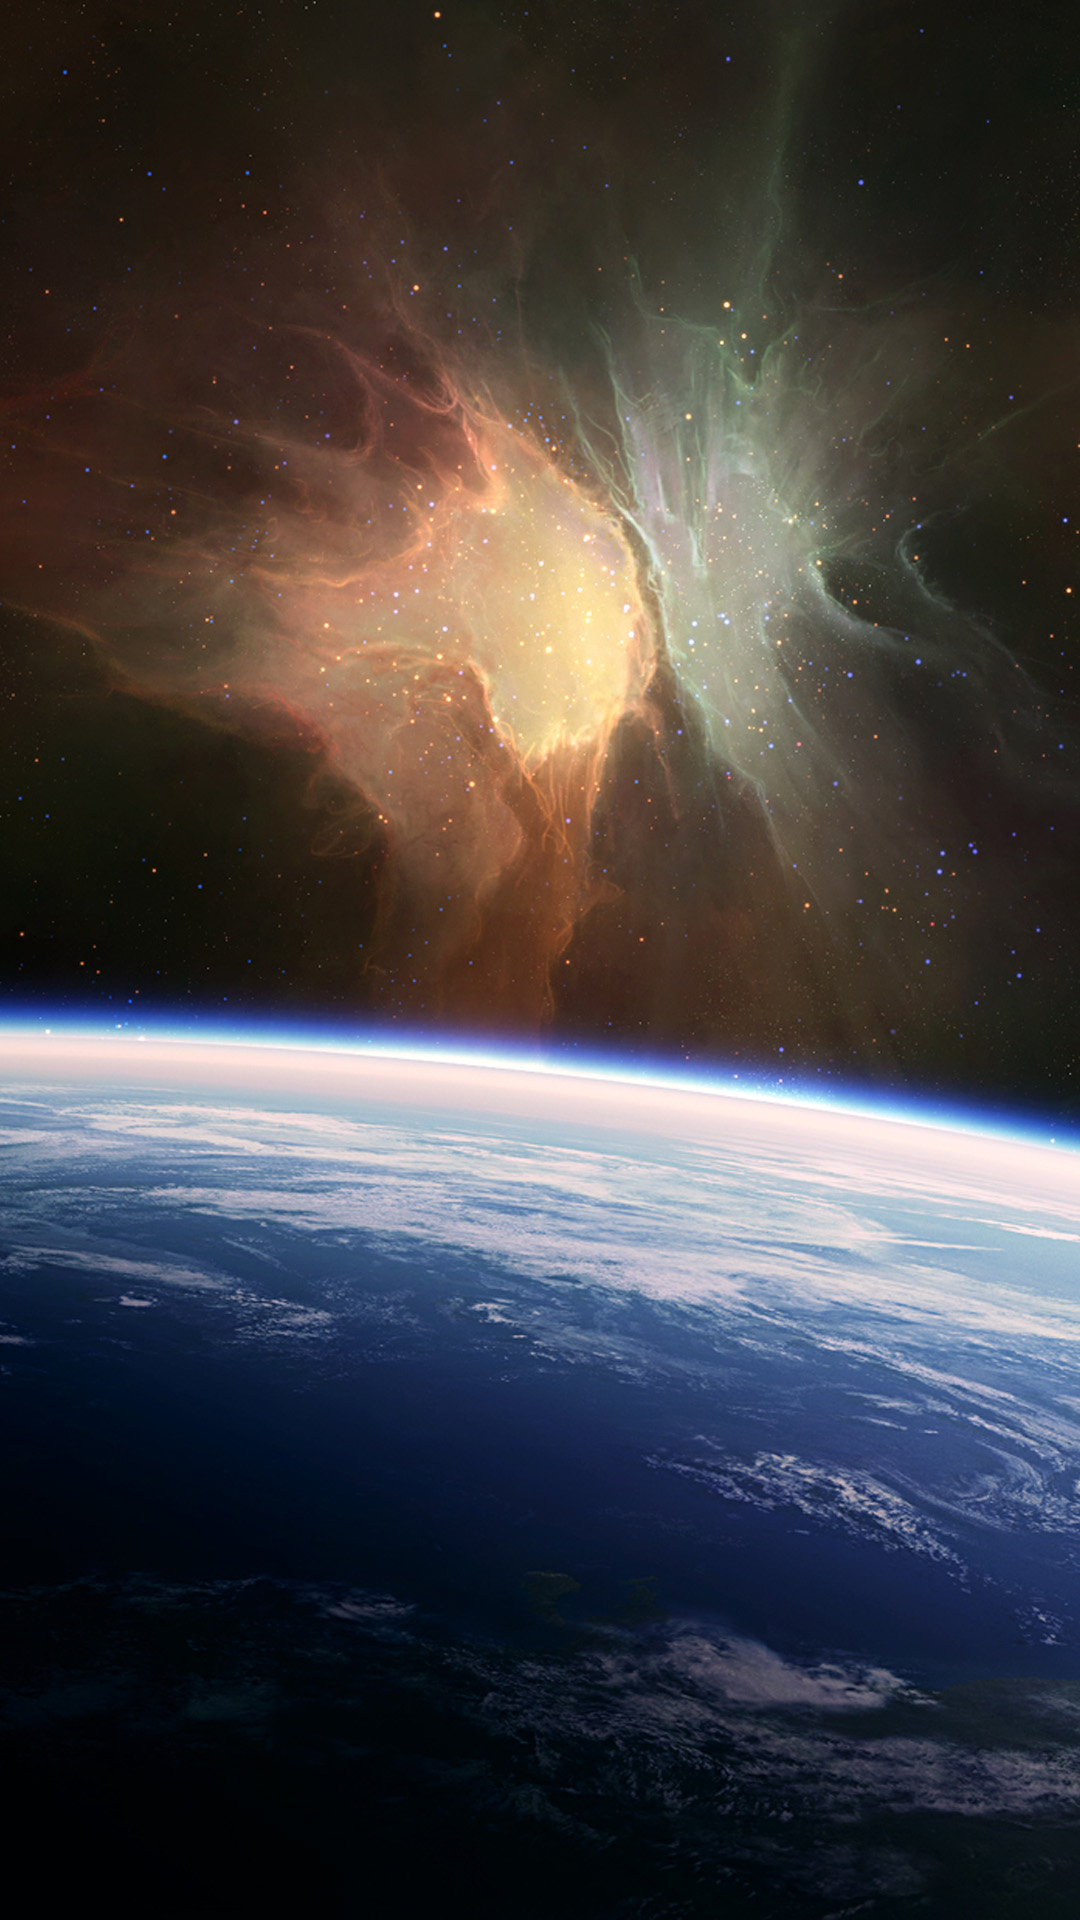 Space Nebula wonders iphone 6 plus wallpaper iPhone 6 Plus